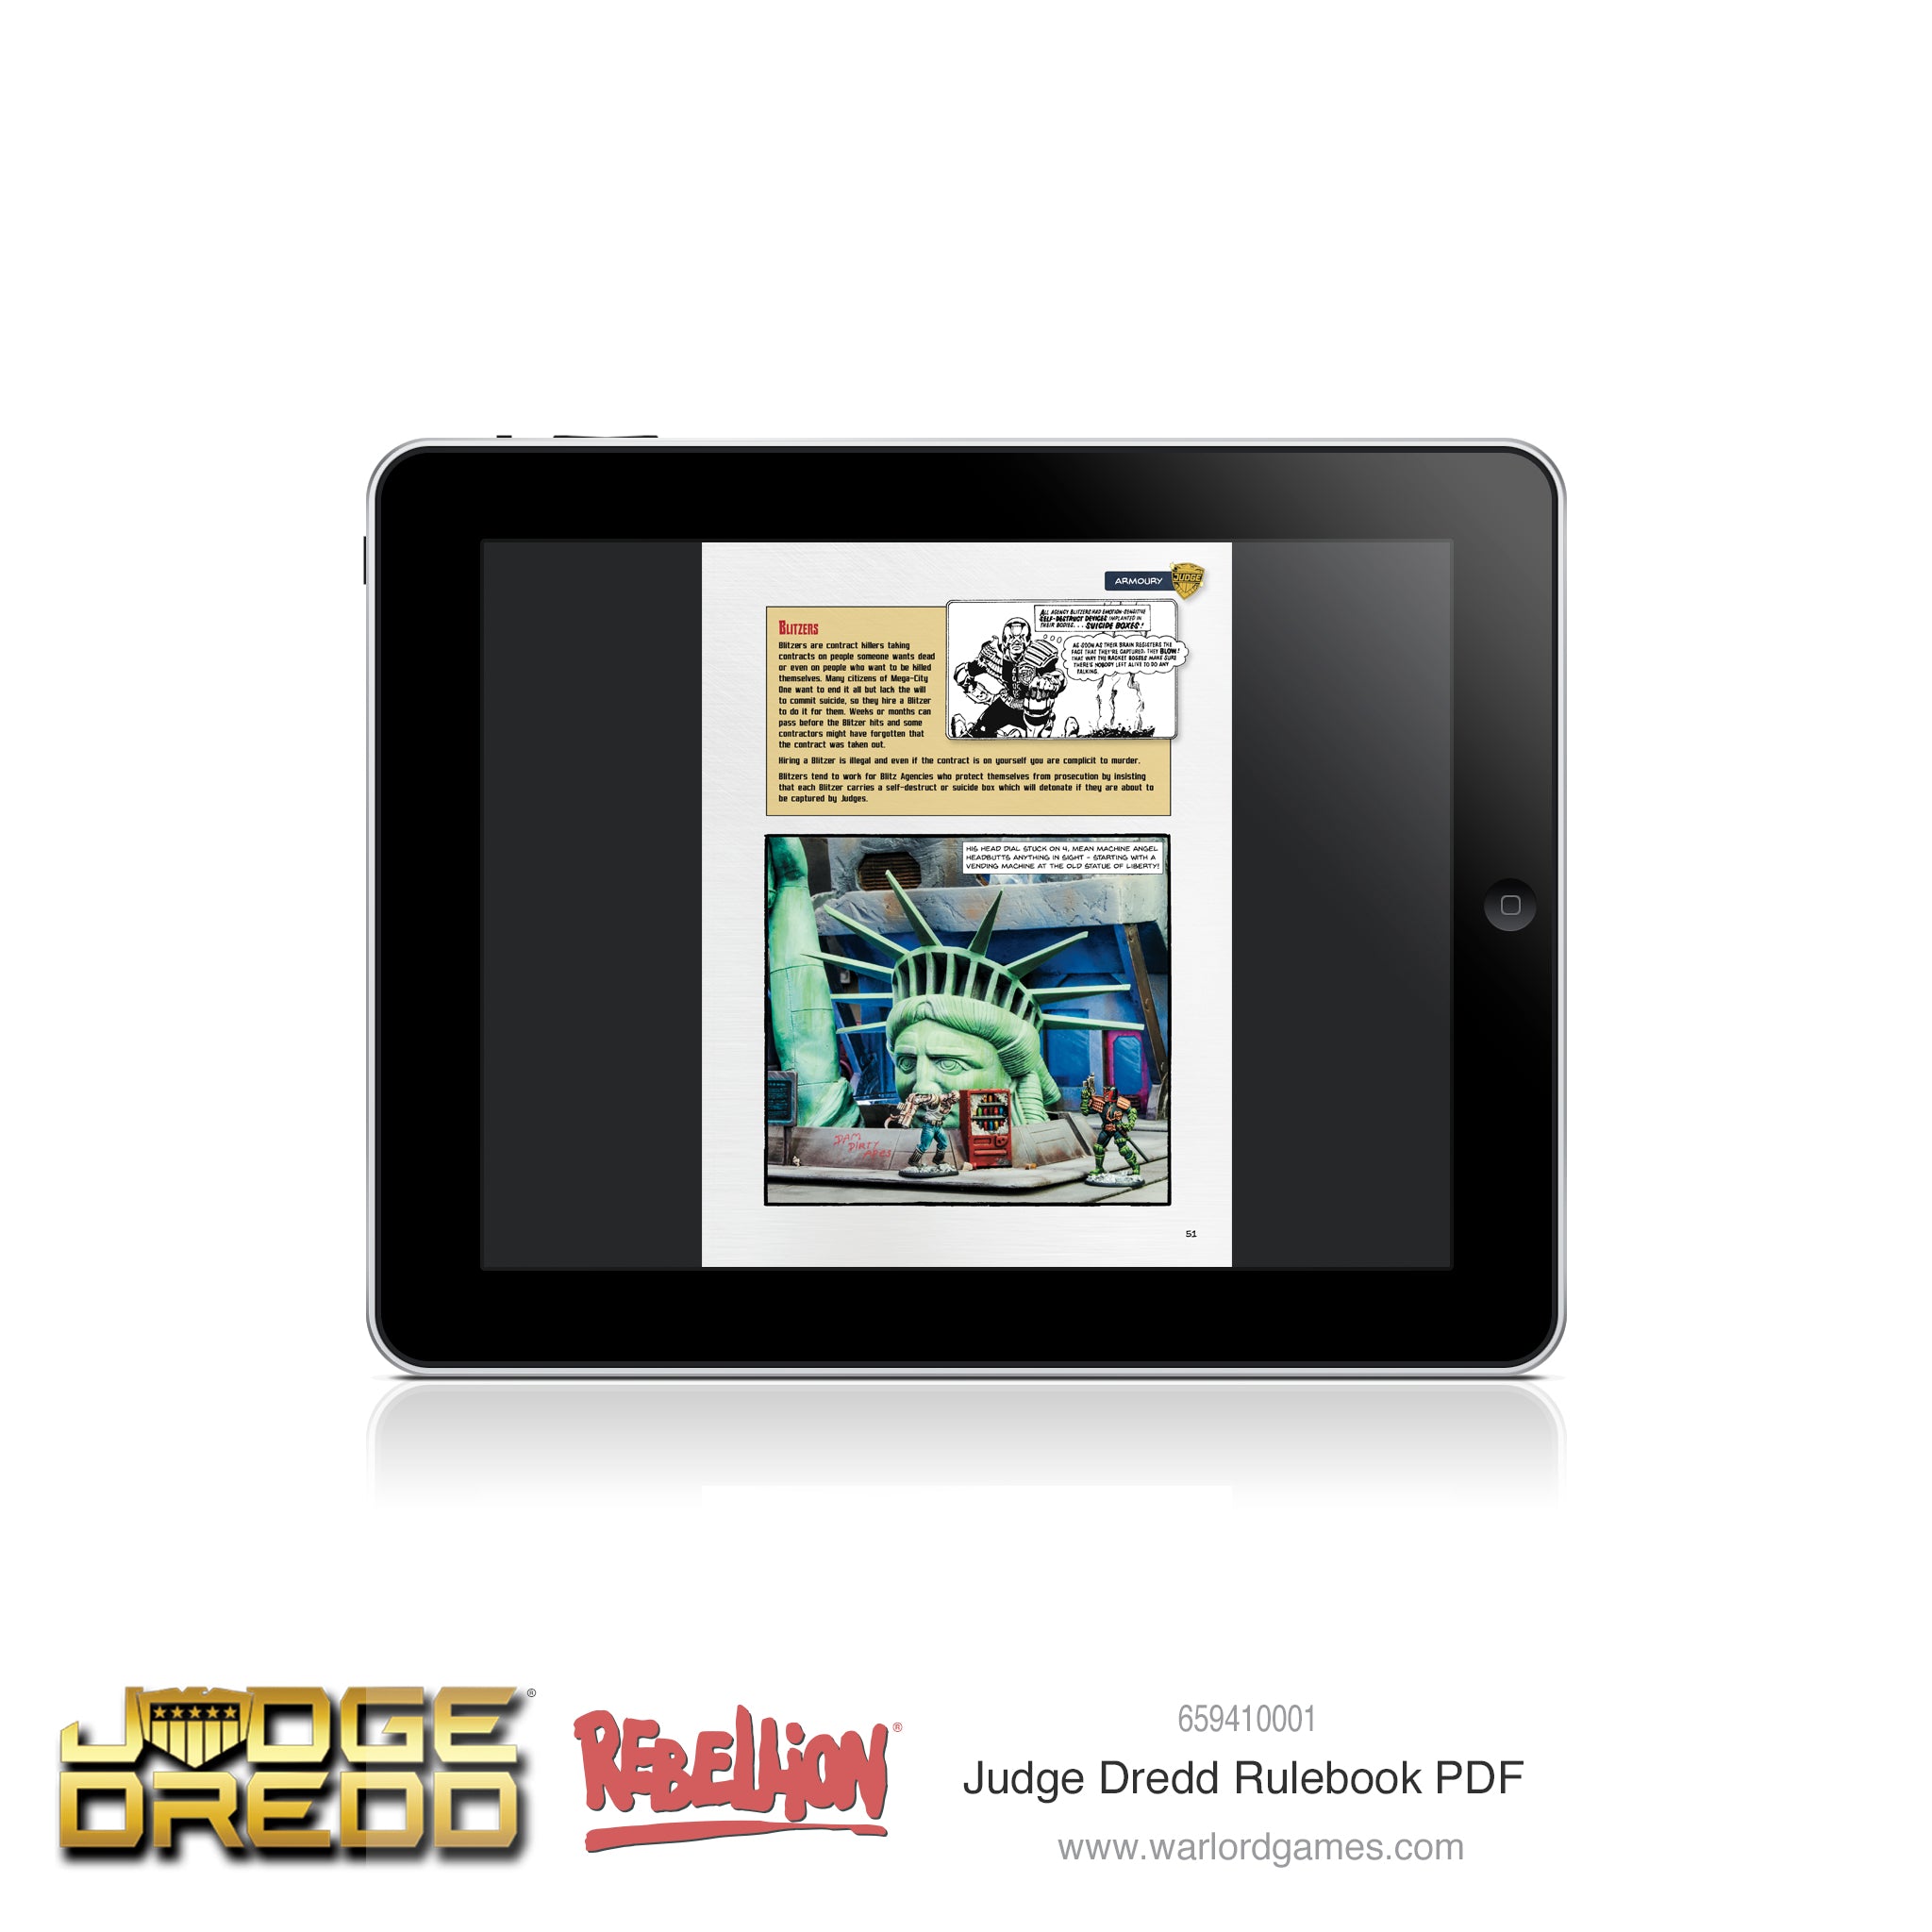 Digital Judge Dredd rulebook PDF